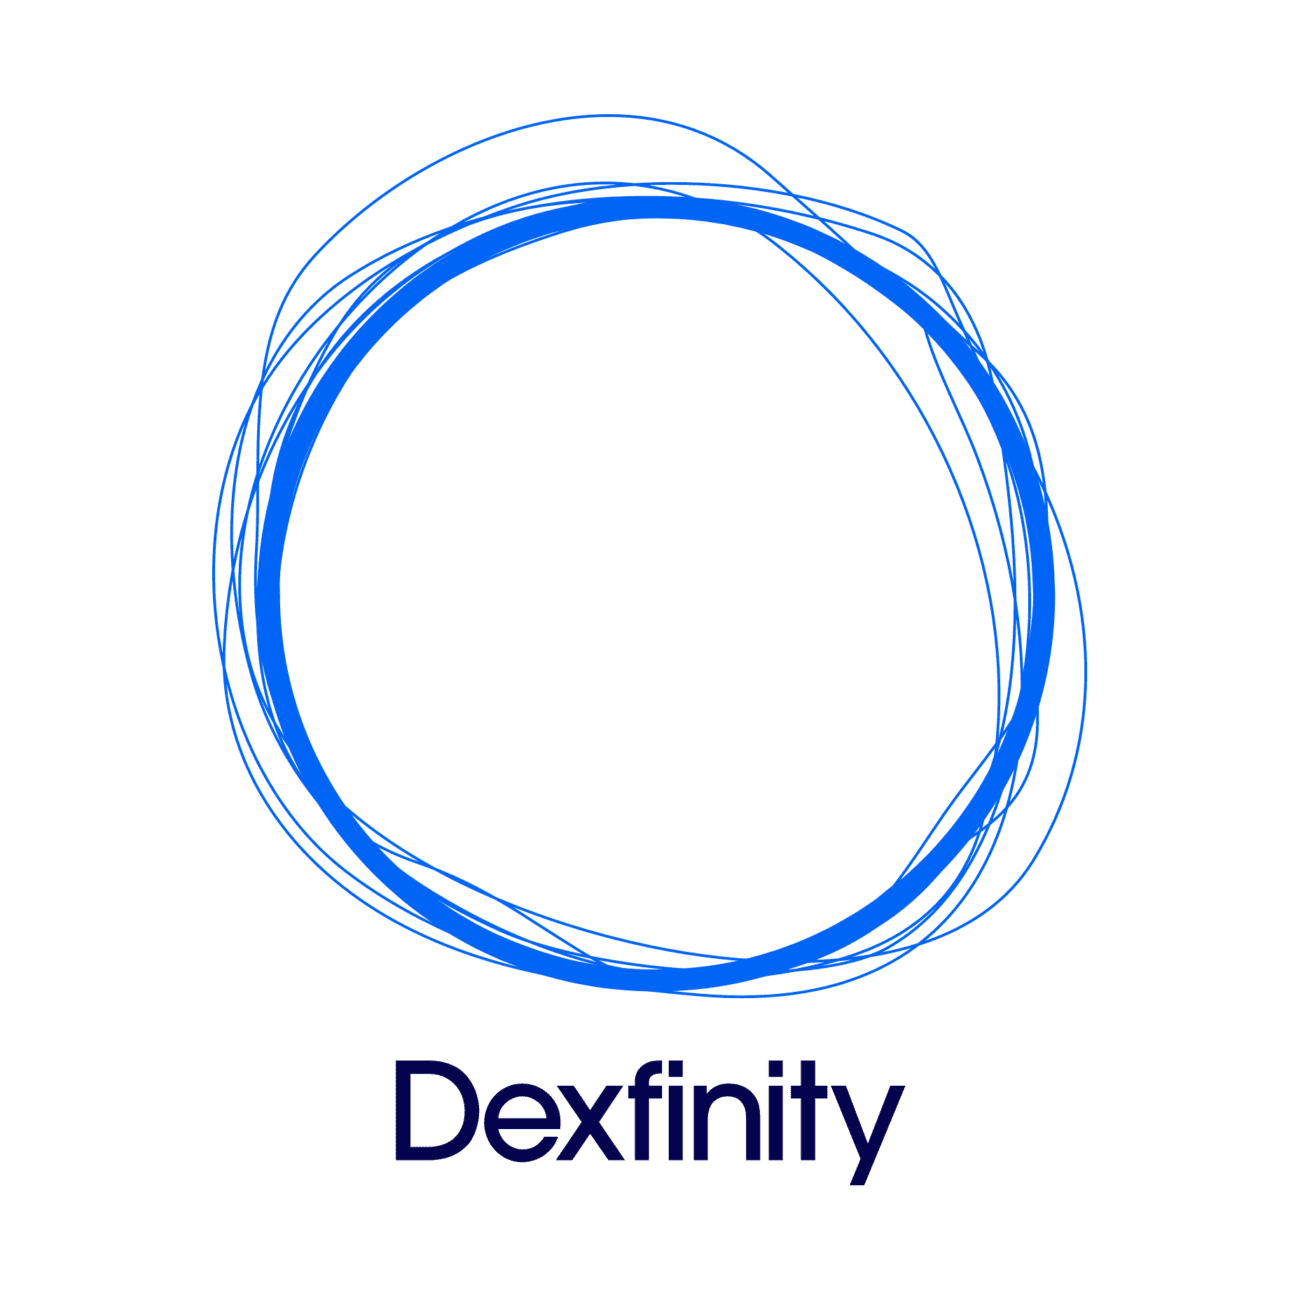 (c) Dexfinity.com